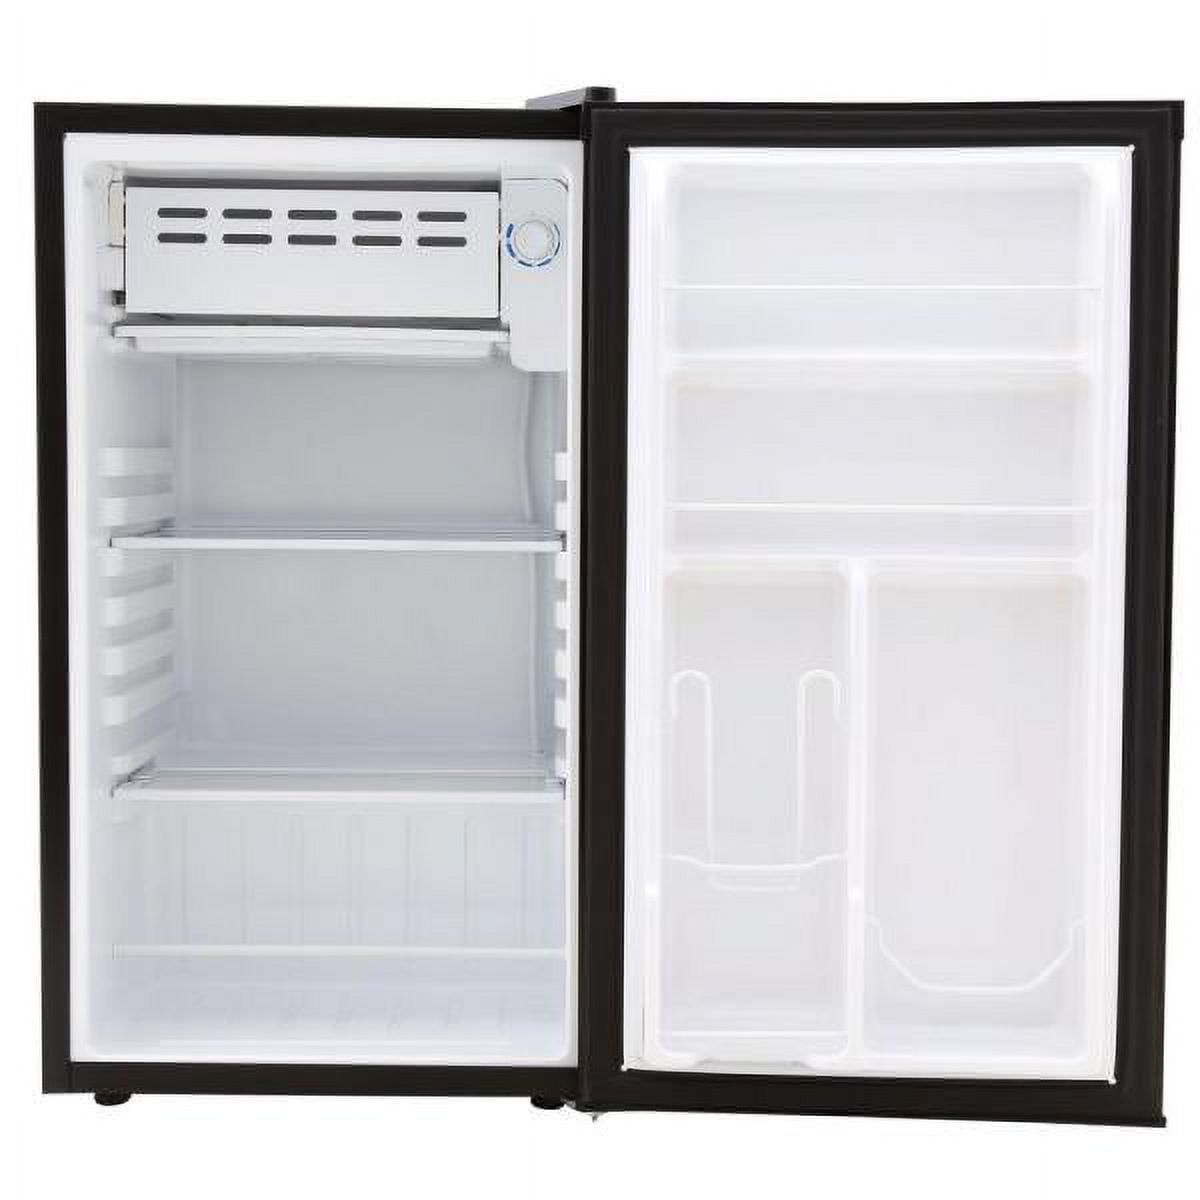 IGLOO 3.2 cu. ft. Mini Refrigerator in Black-FR320-BLACK - image 5 of 7